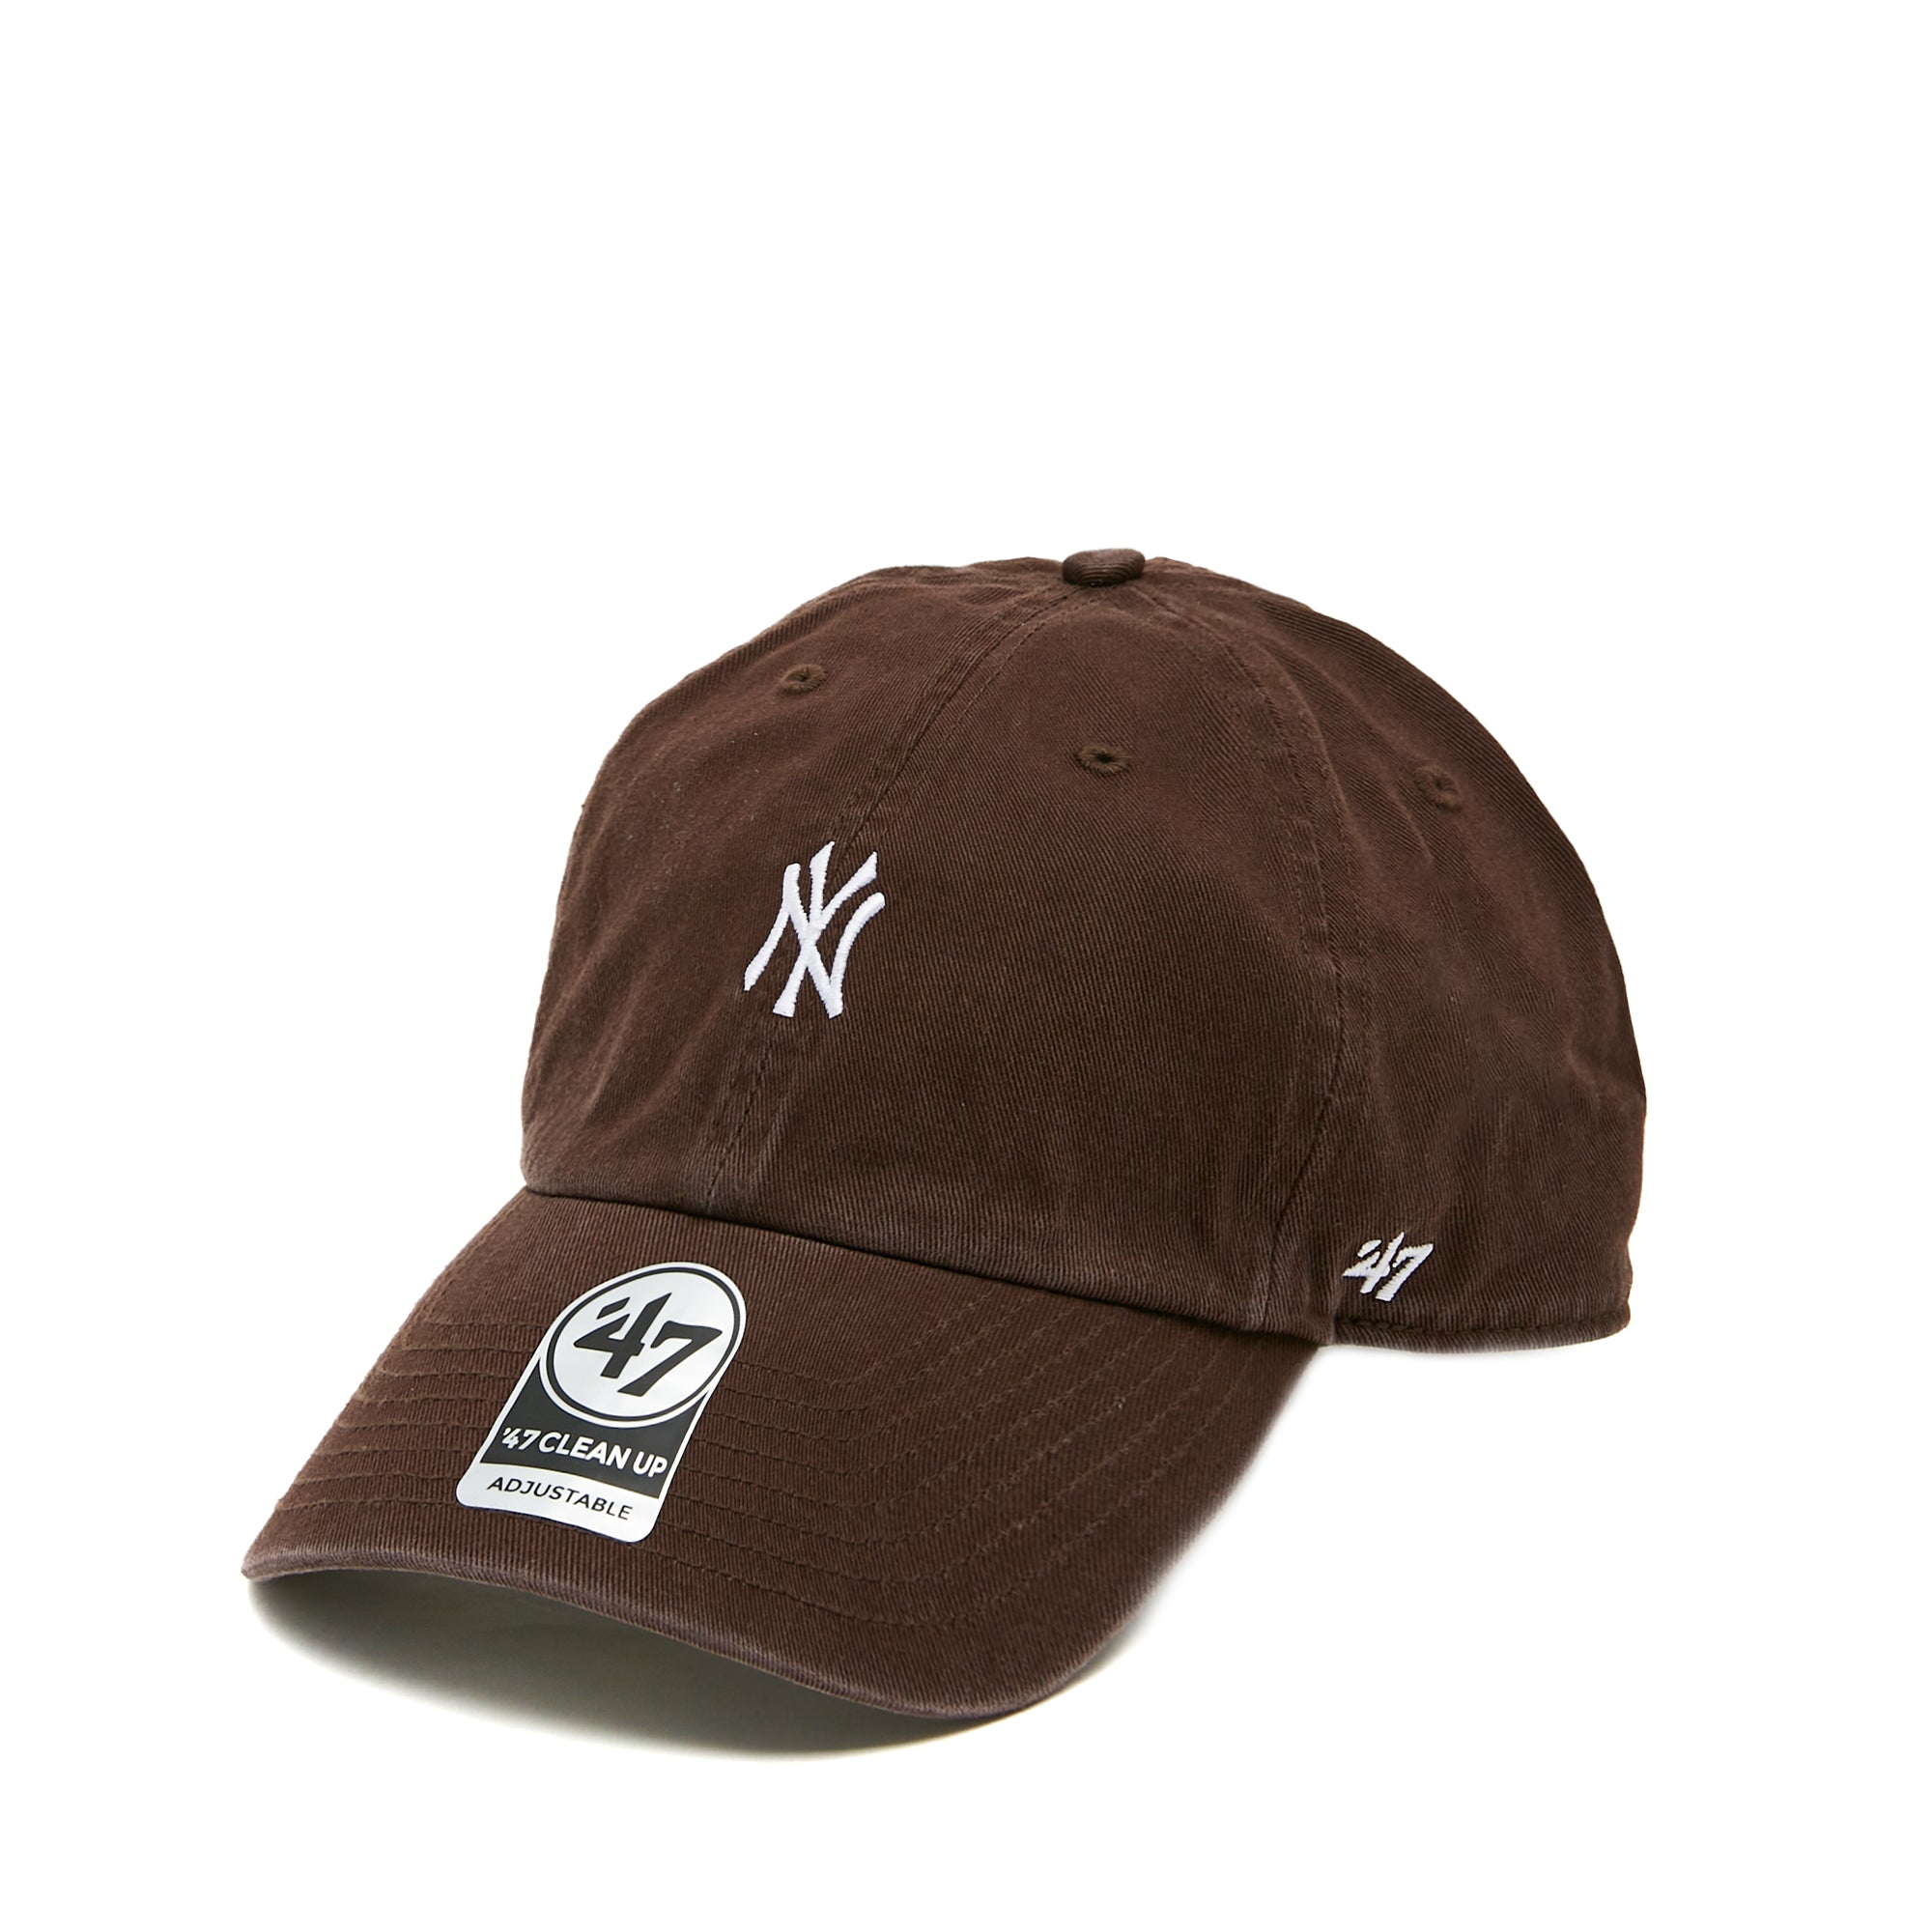 MLB New York Yankees Base Runner Cap Brown One Size